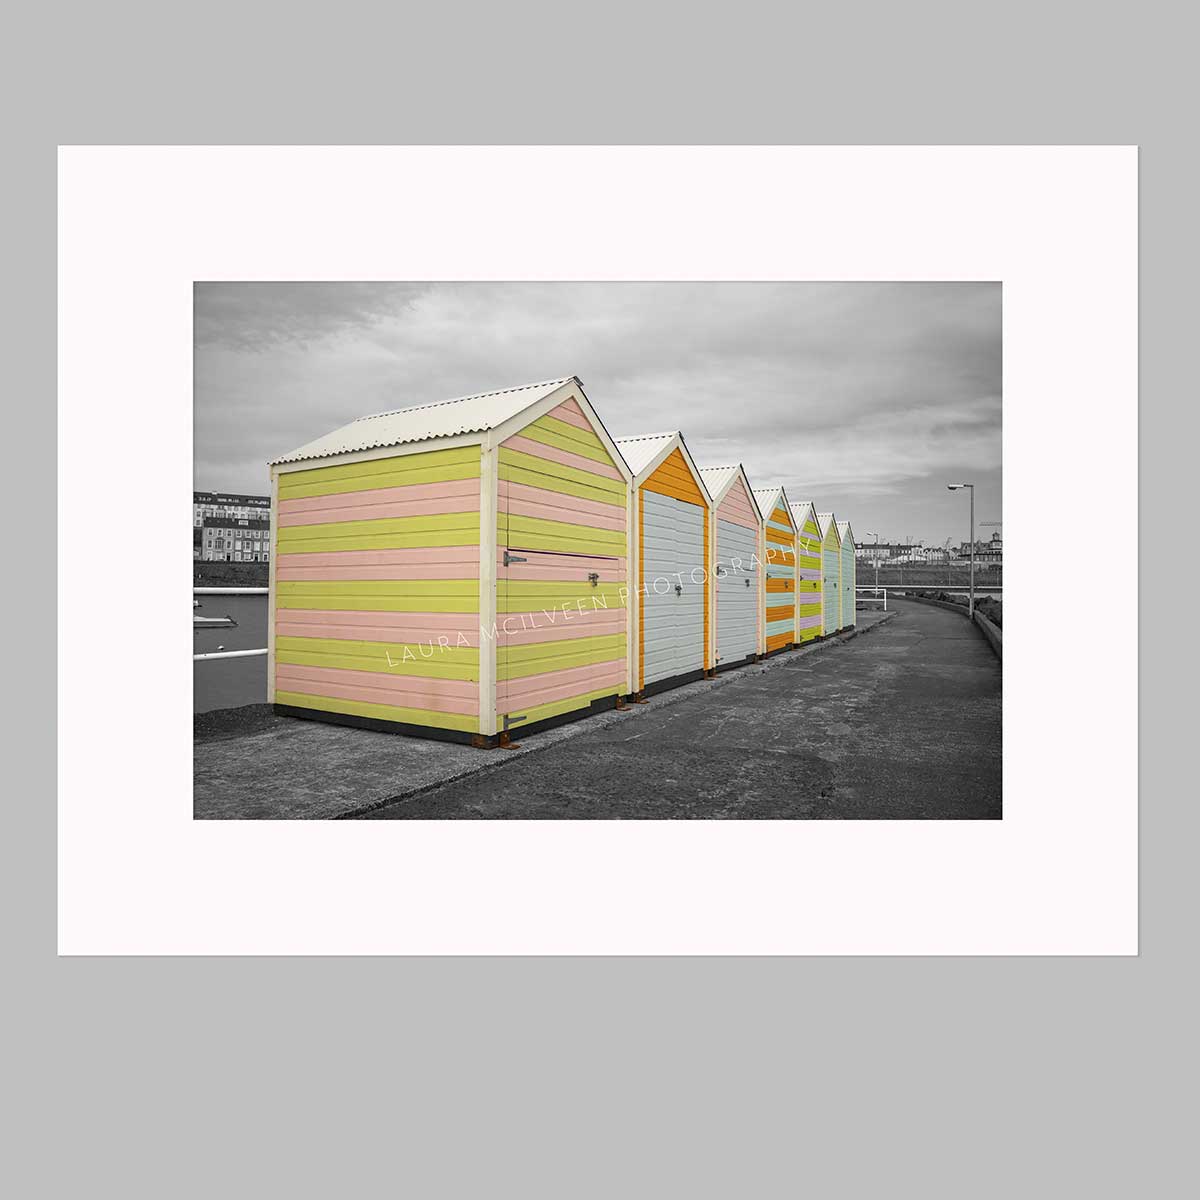 'Summer vibes!' - Portrush Beach Huts